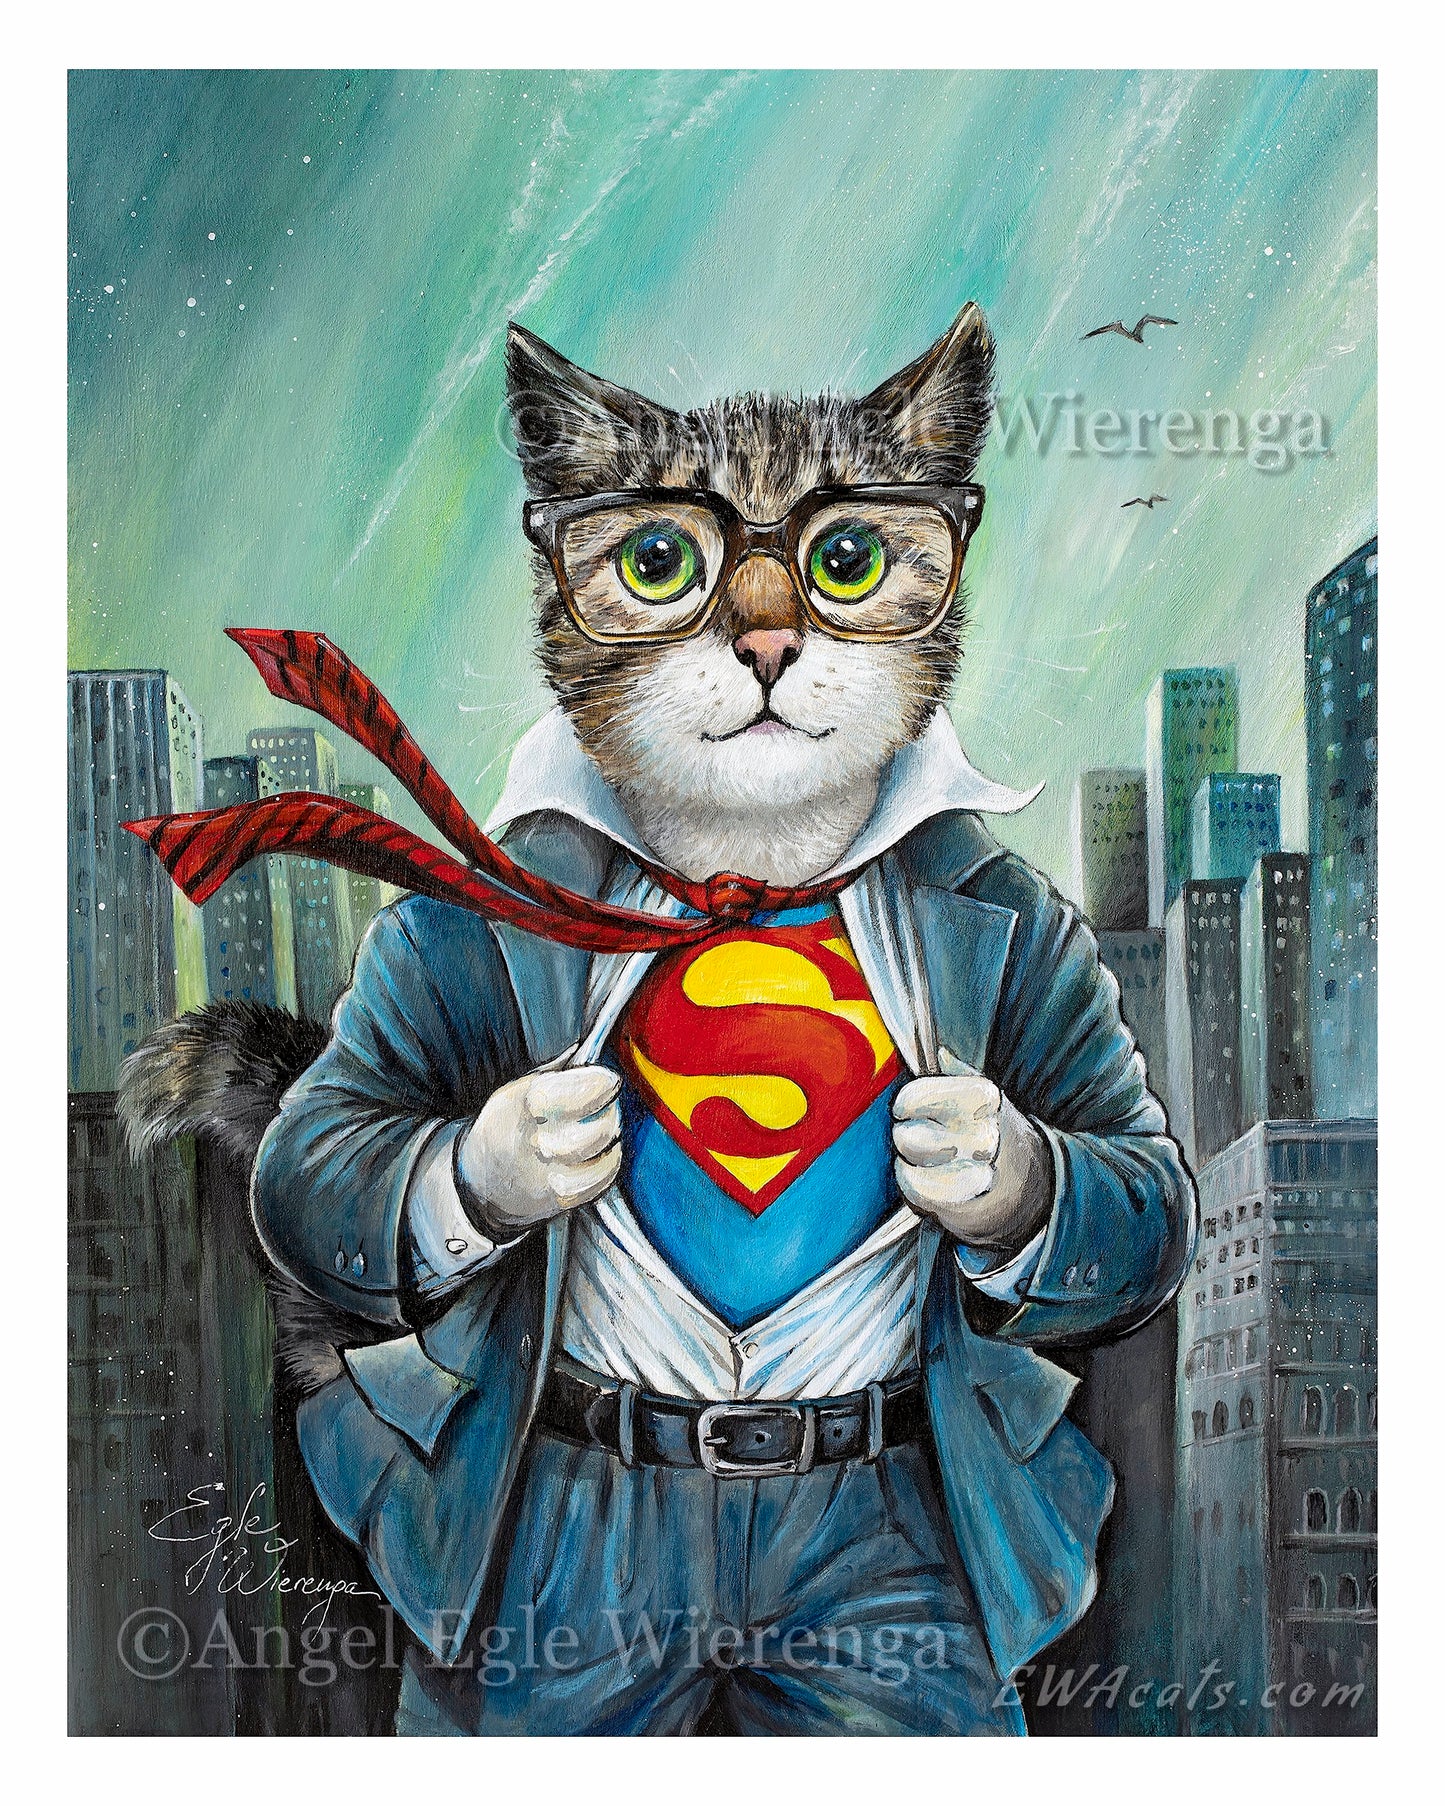 Art Print "The Cat of Steel"